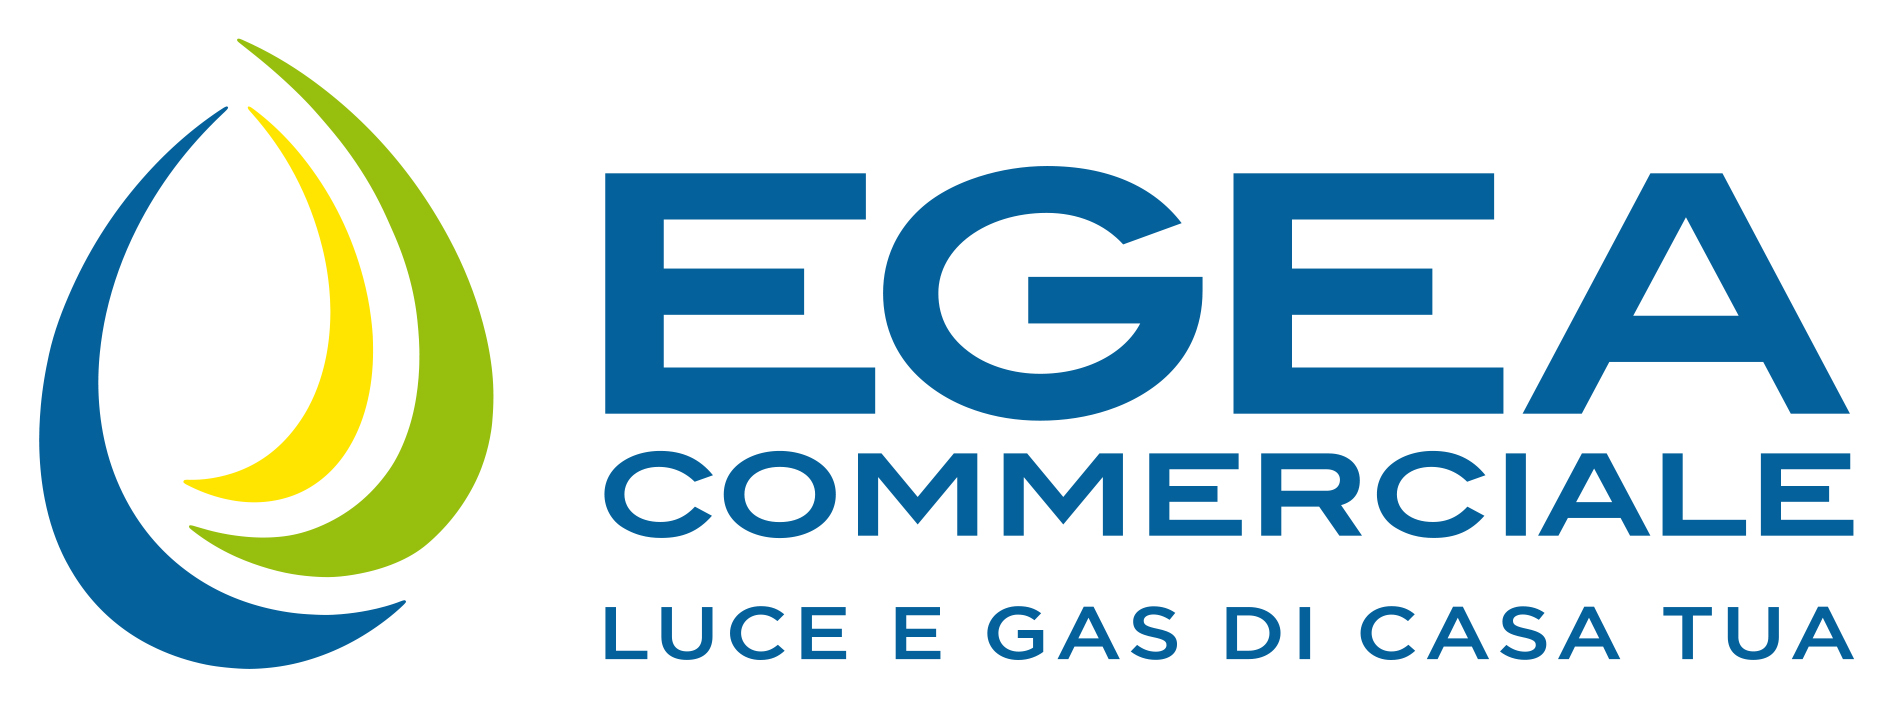 Logo_EGEA_COMM_Luce e gas_RGBjpg